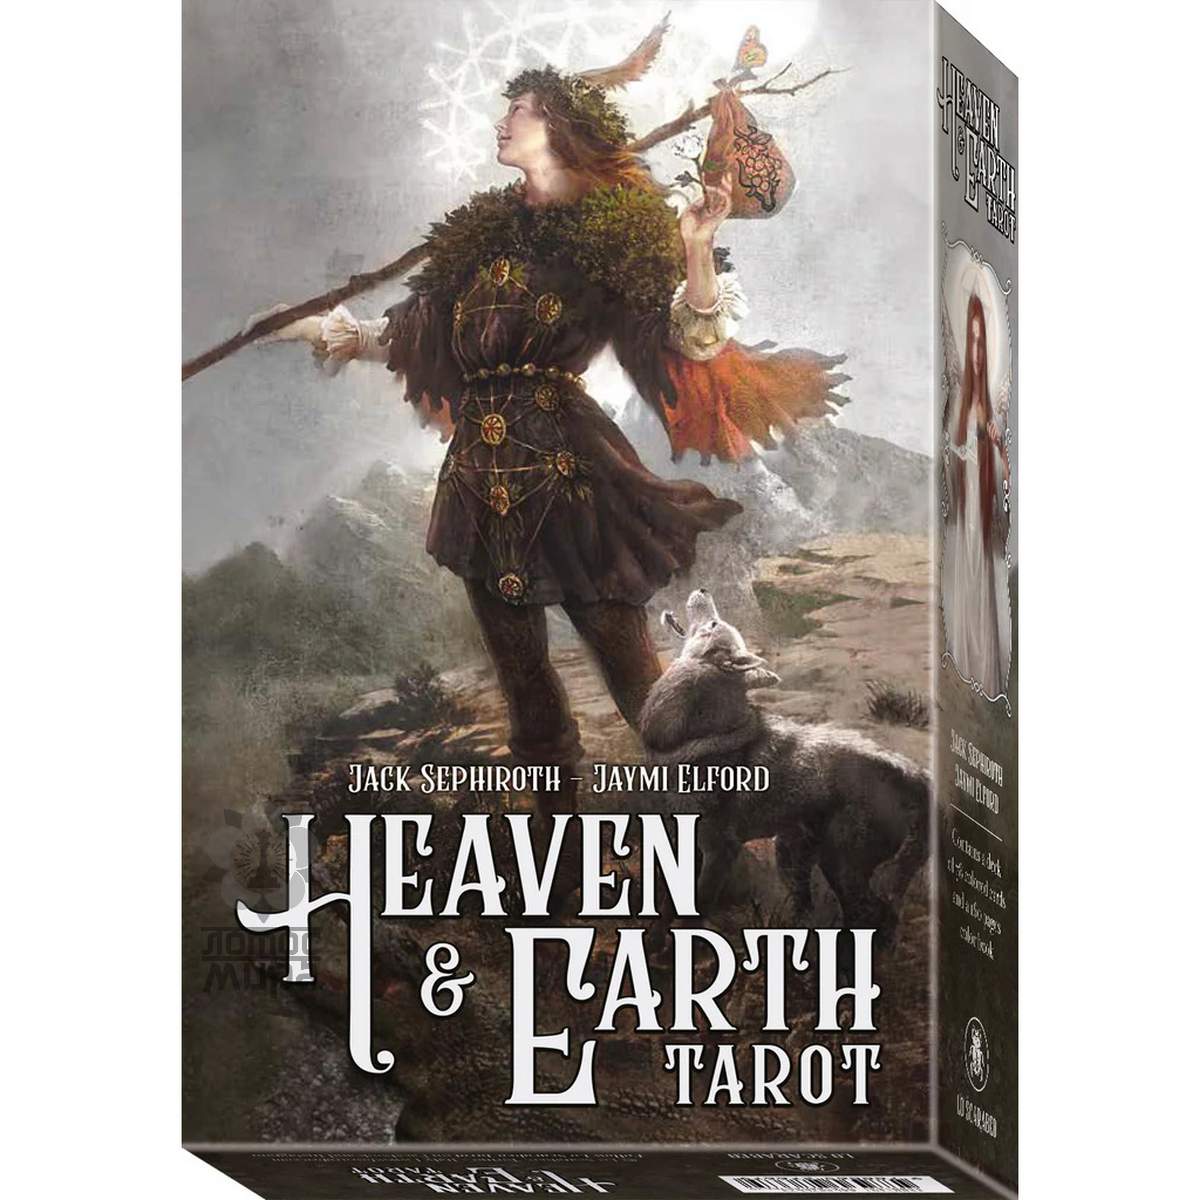 Heaven & Earth Tarot /Lo Scarabeo/